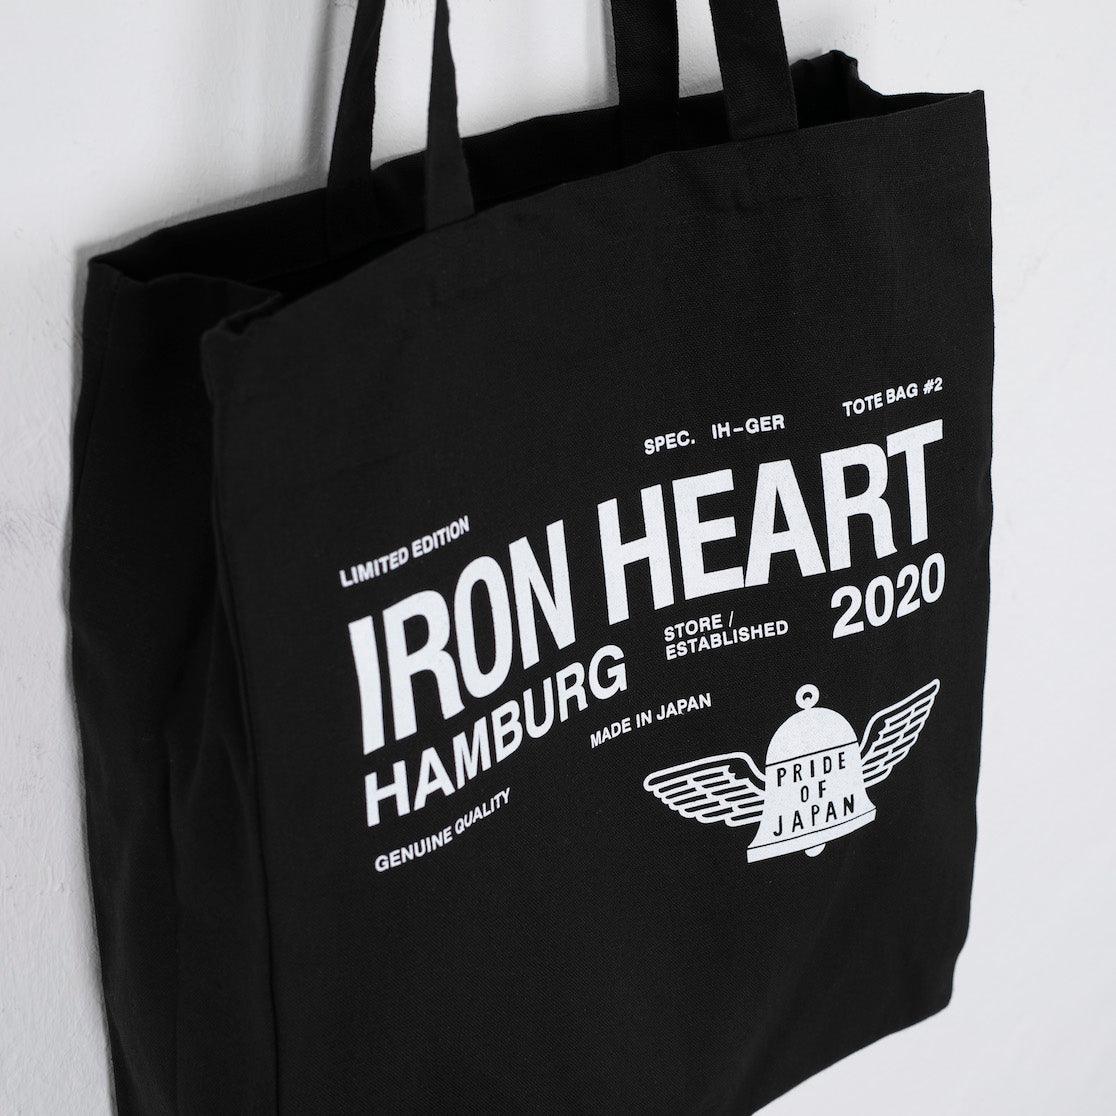 IHG-Tote#2-BLK - Iron Heart Hamburg Tote Bag #2 - Black